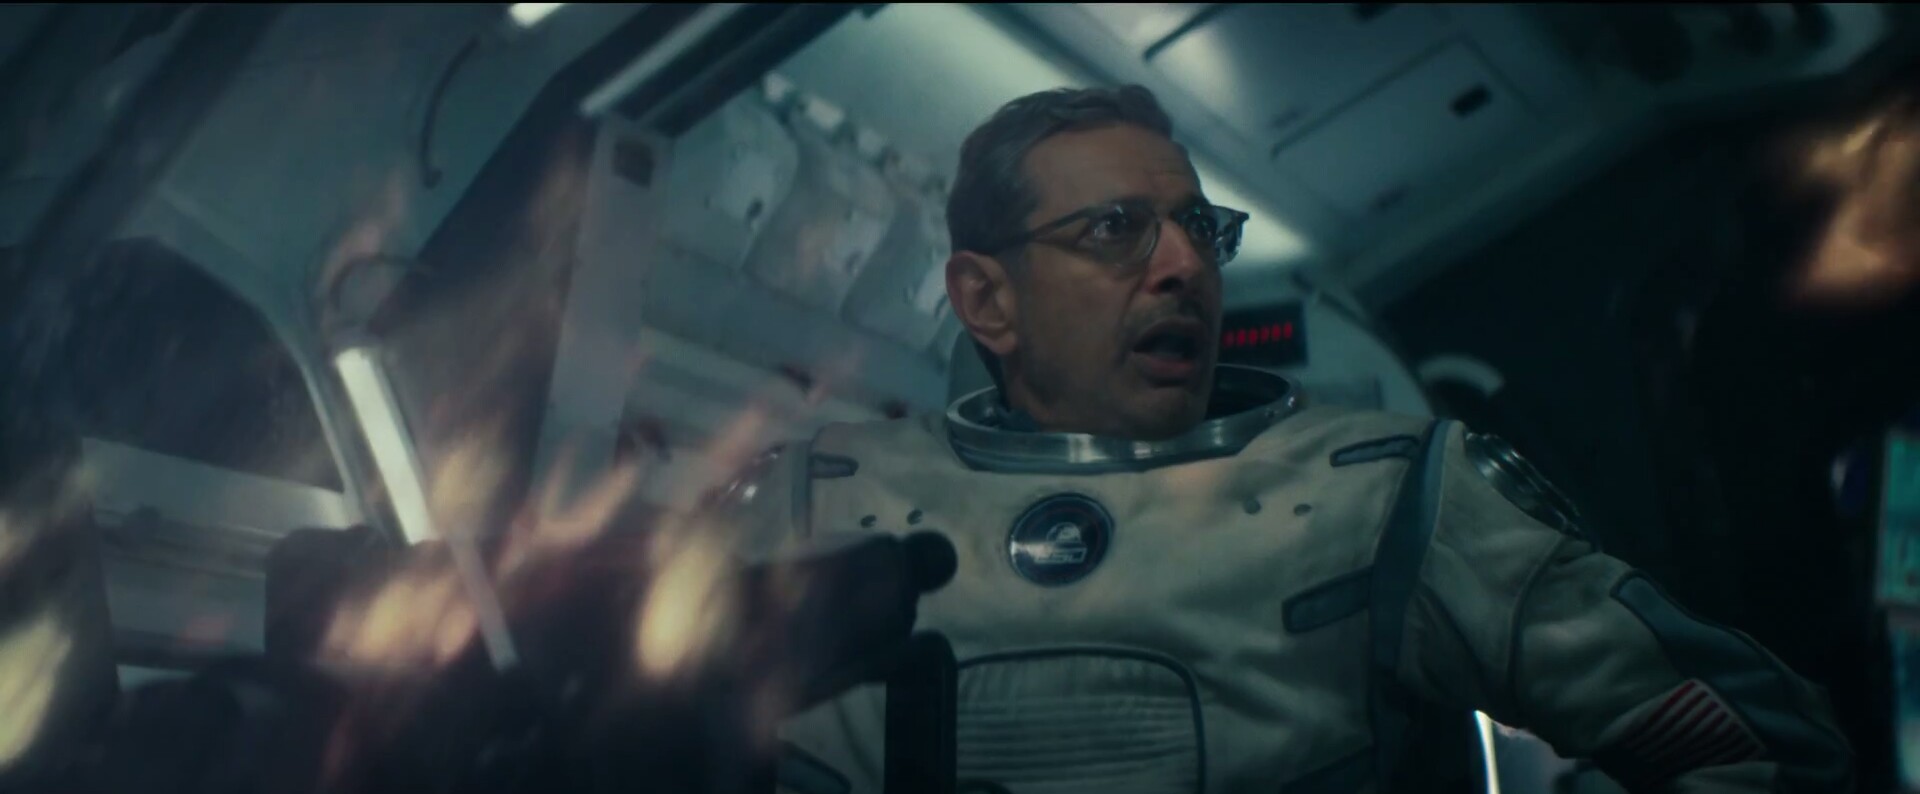 Jeff Goldblum as David Levinson in Independence Day: Resurgence